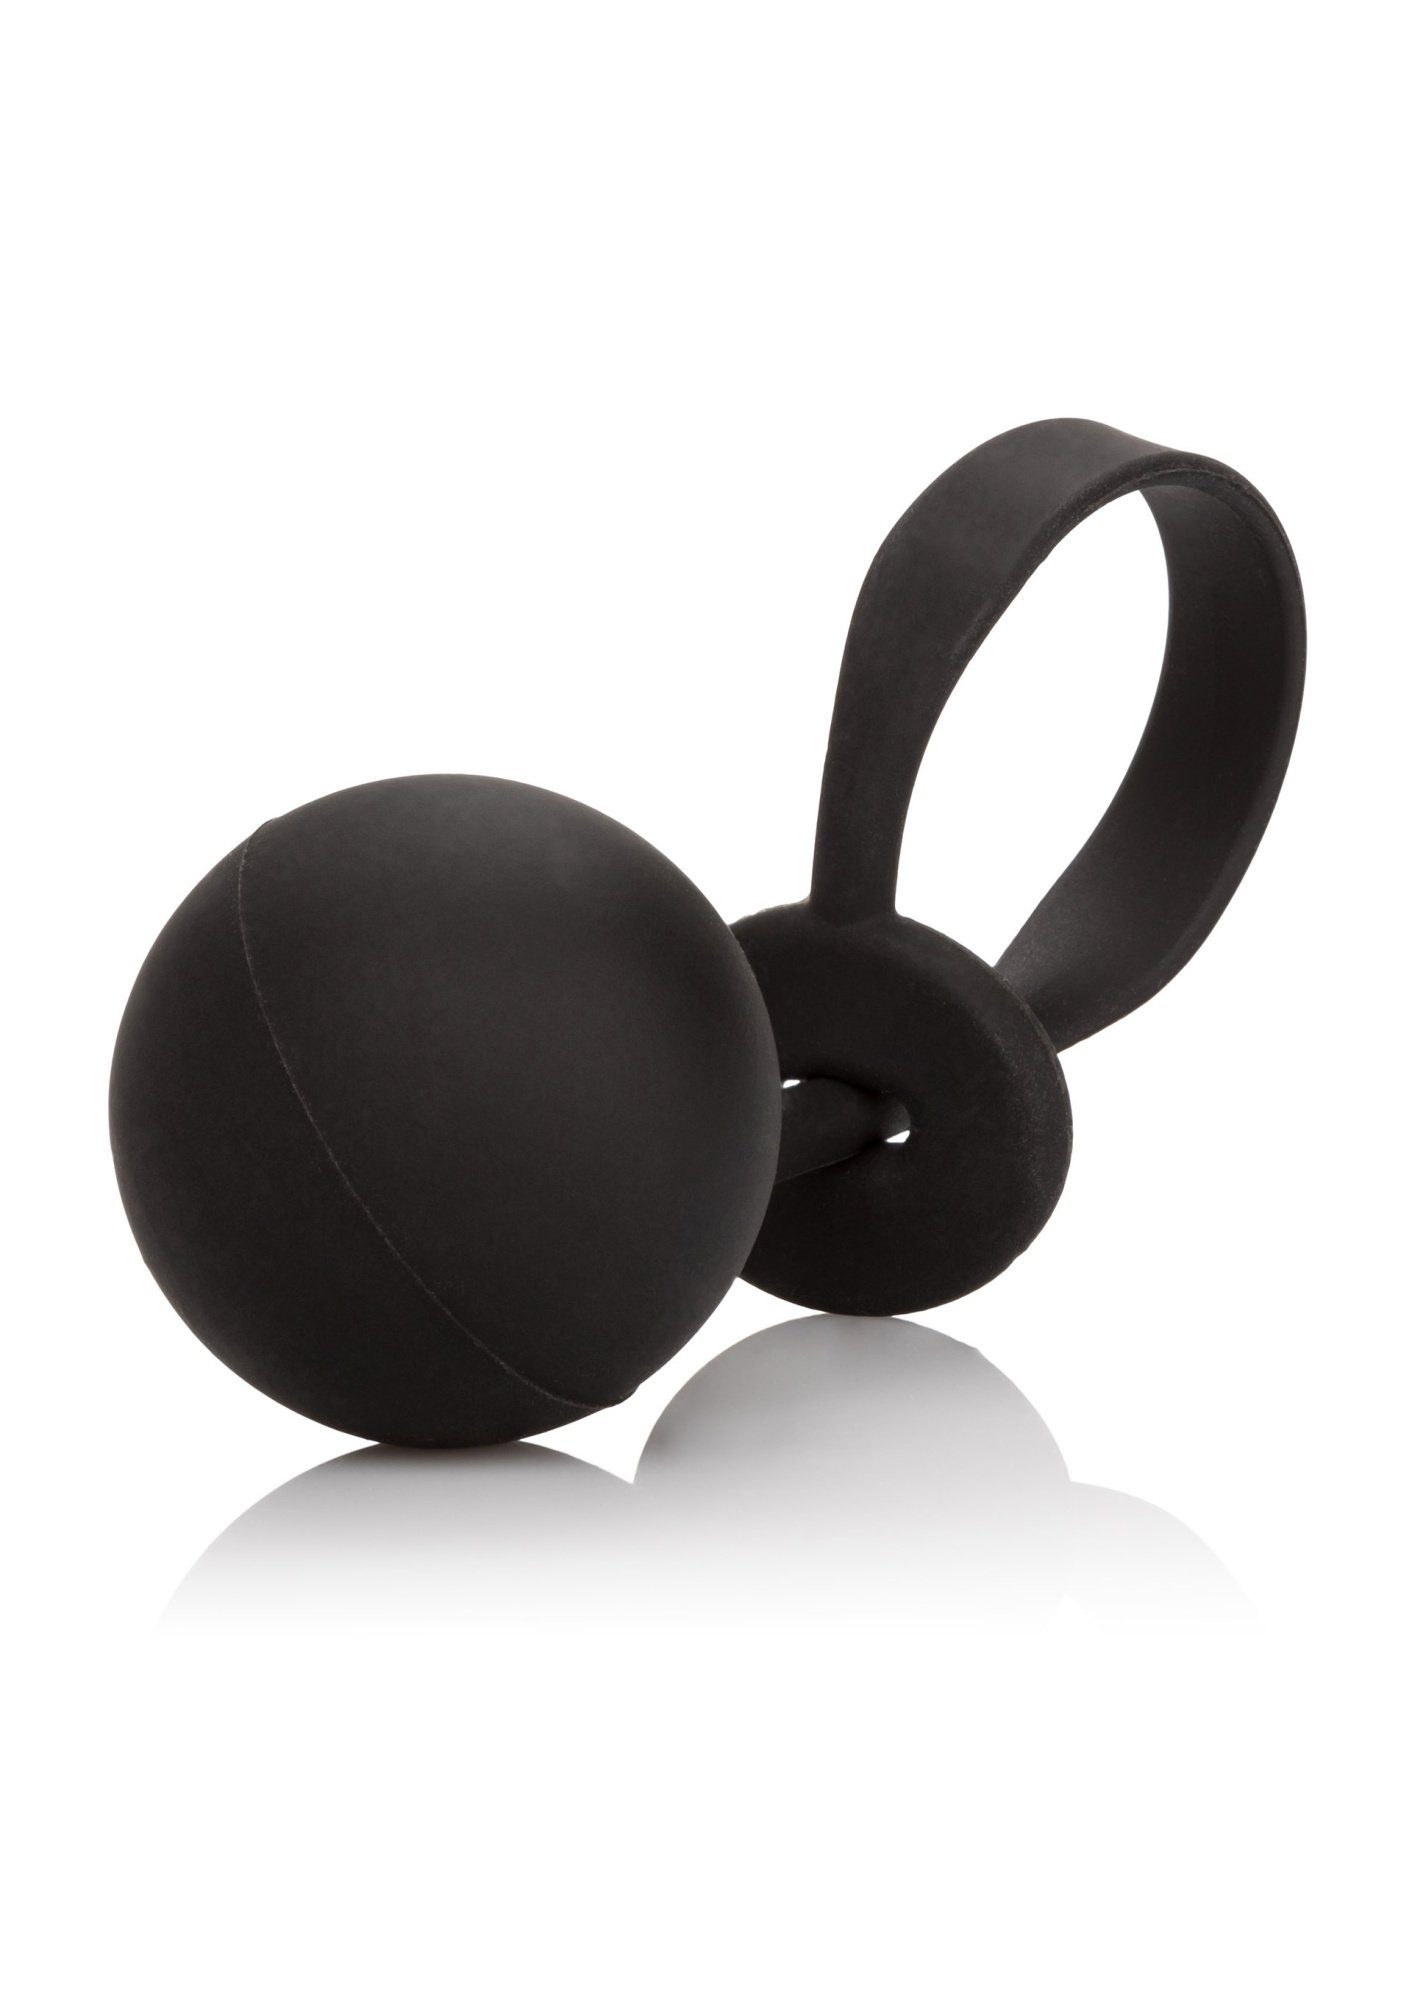 Calexotics Penisring Lasso Ring Ballstretcher Penisgewicht - schwarz